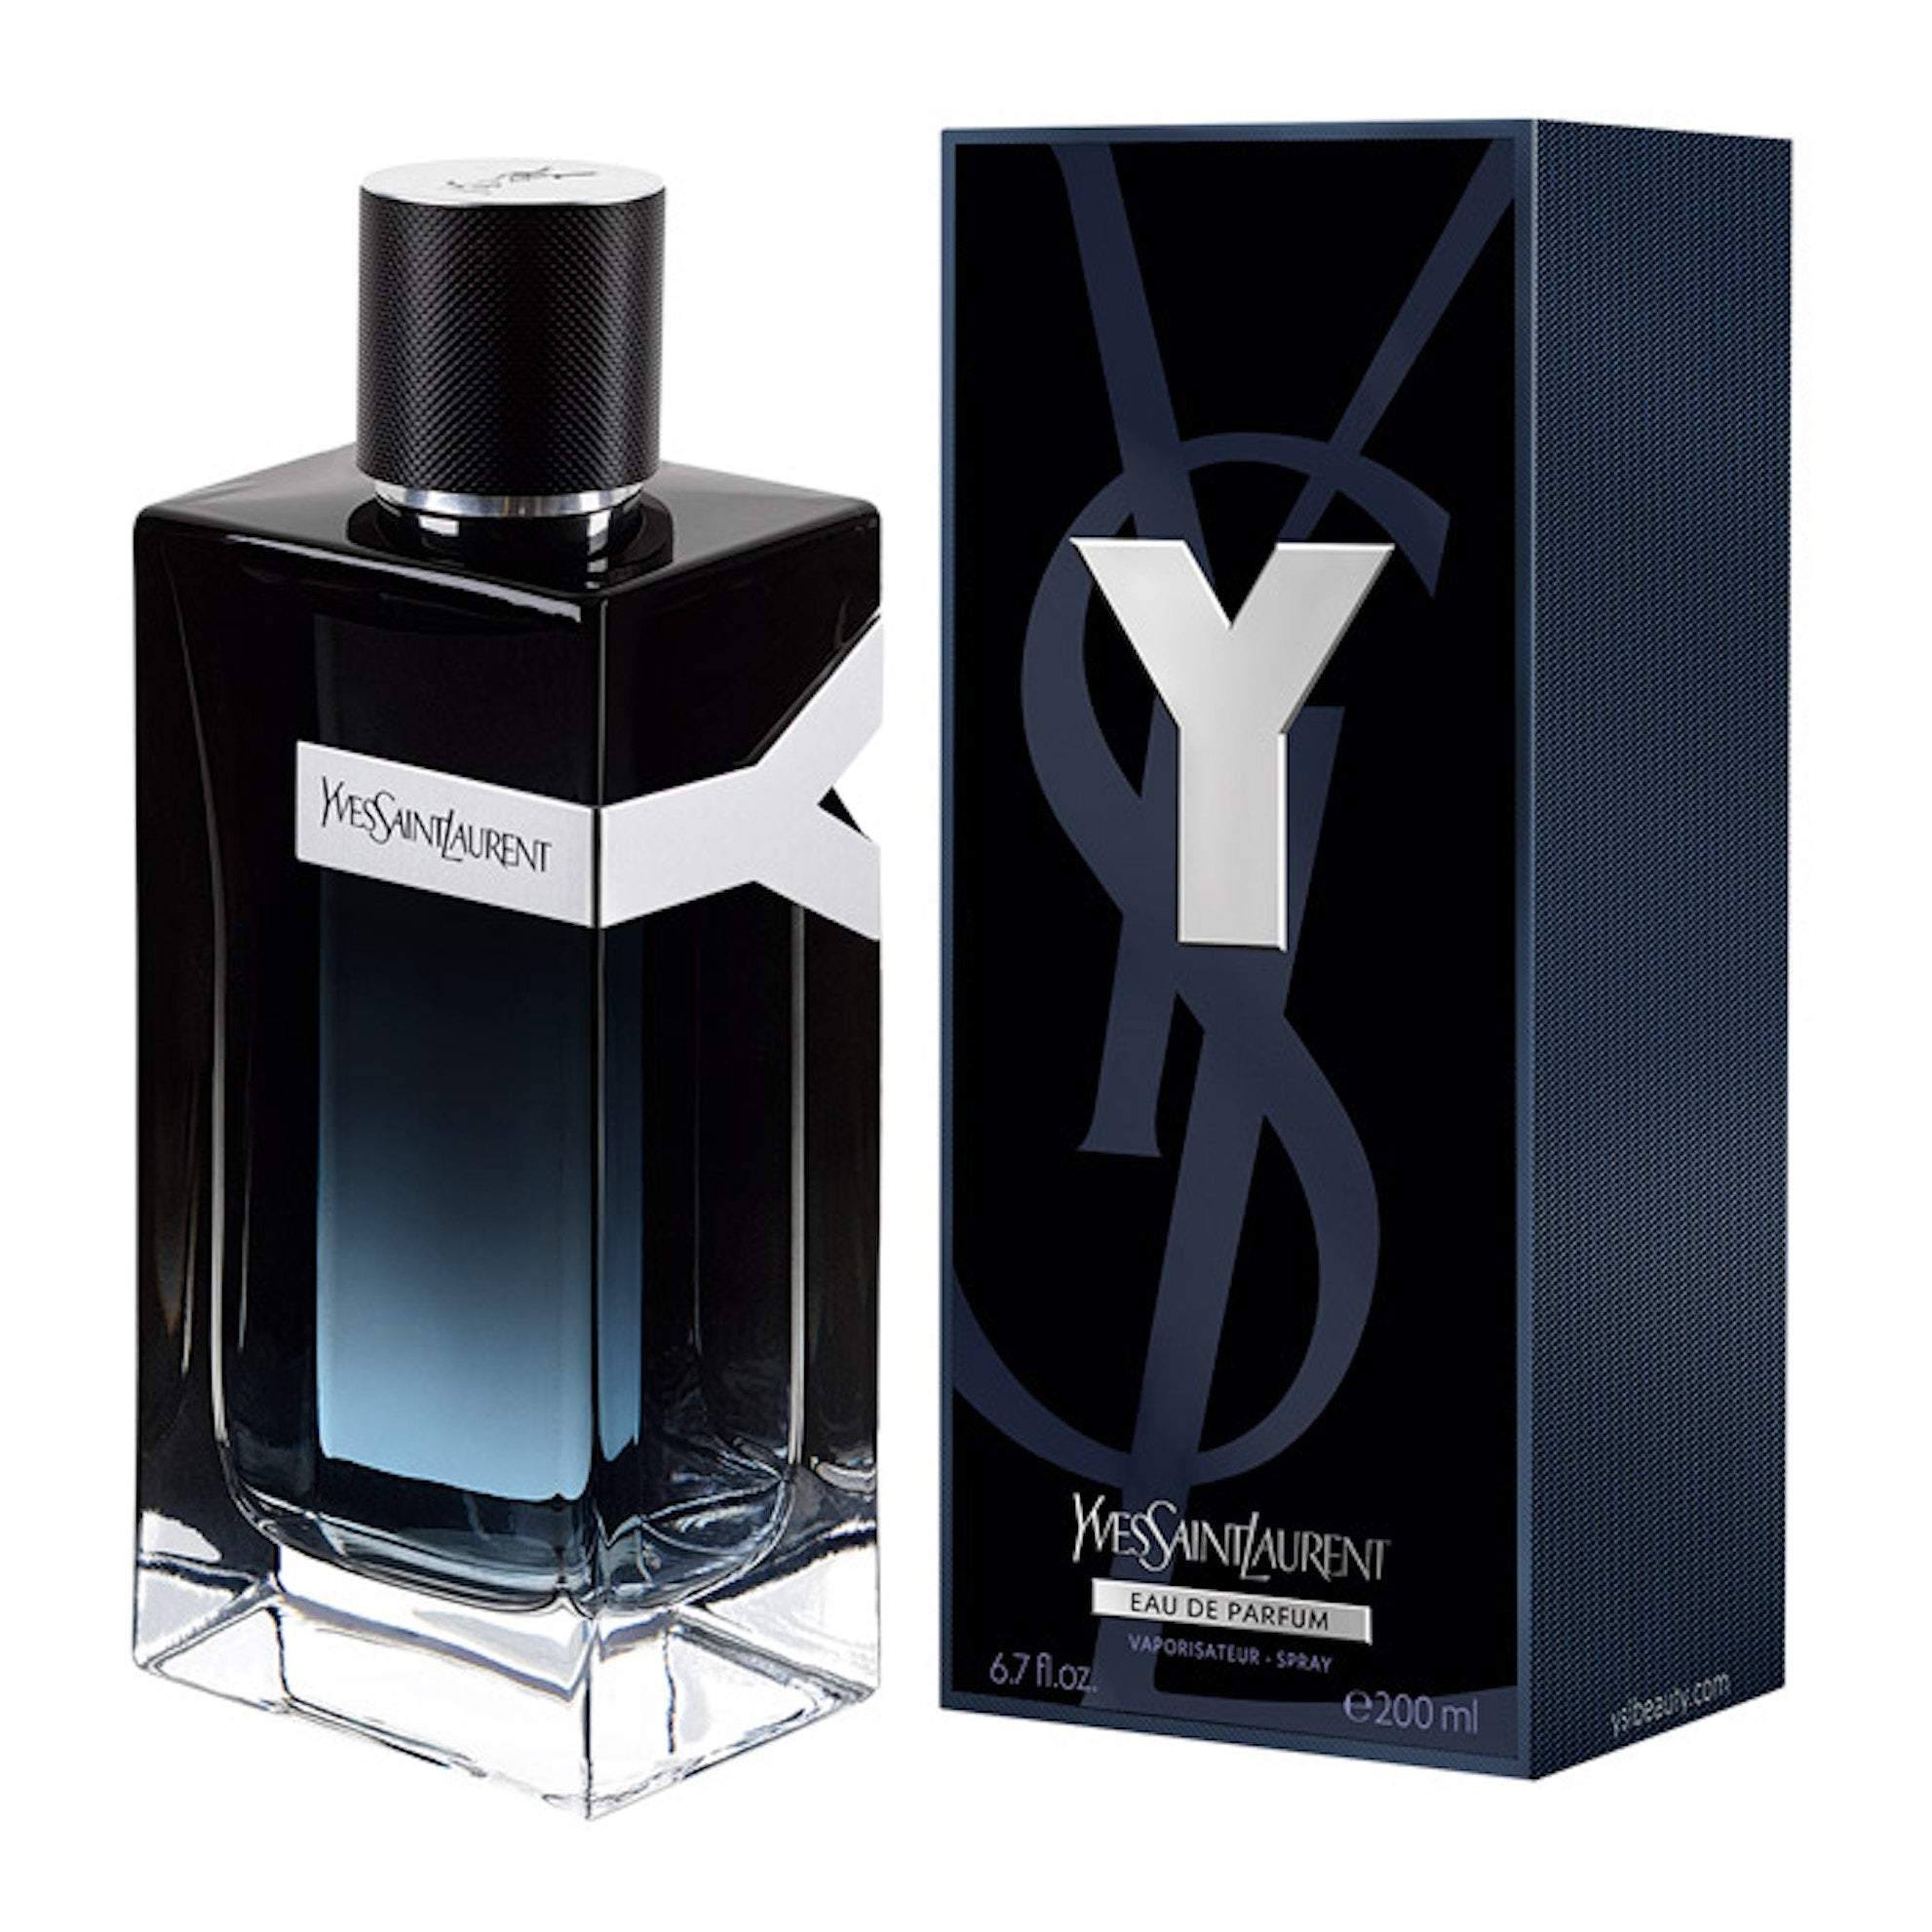 Yves Saint Laurent Y Eau de Parfum 200ml, 100ml & 60ml - Peacock Bazaar